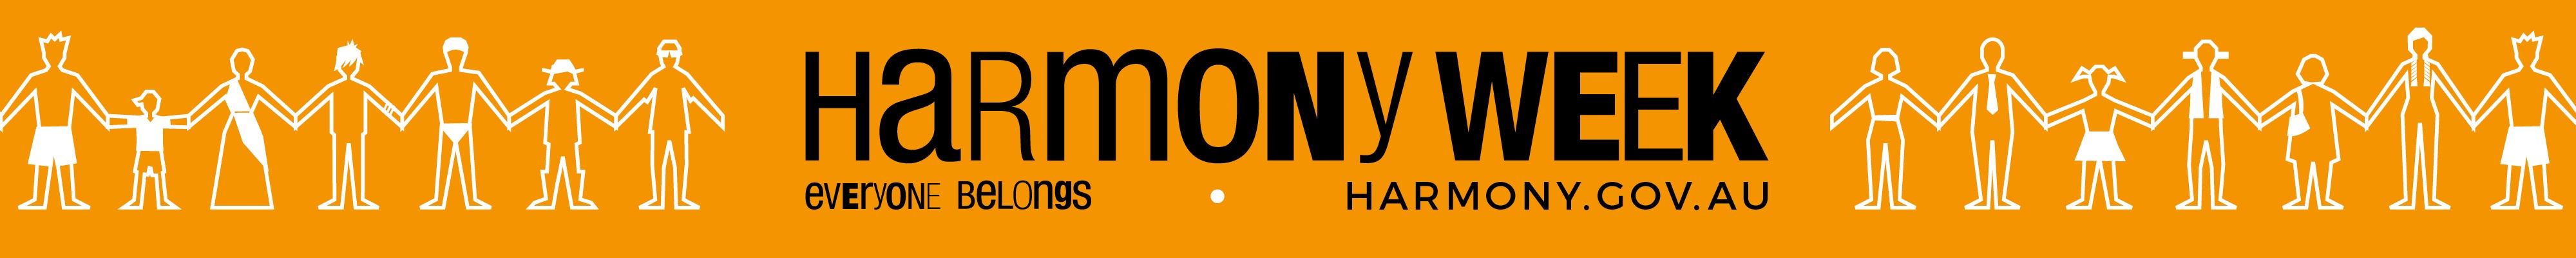 hw-web-banner-horizontal-orange.jpg